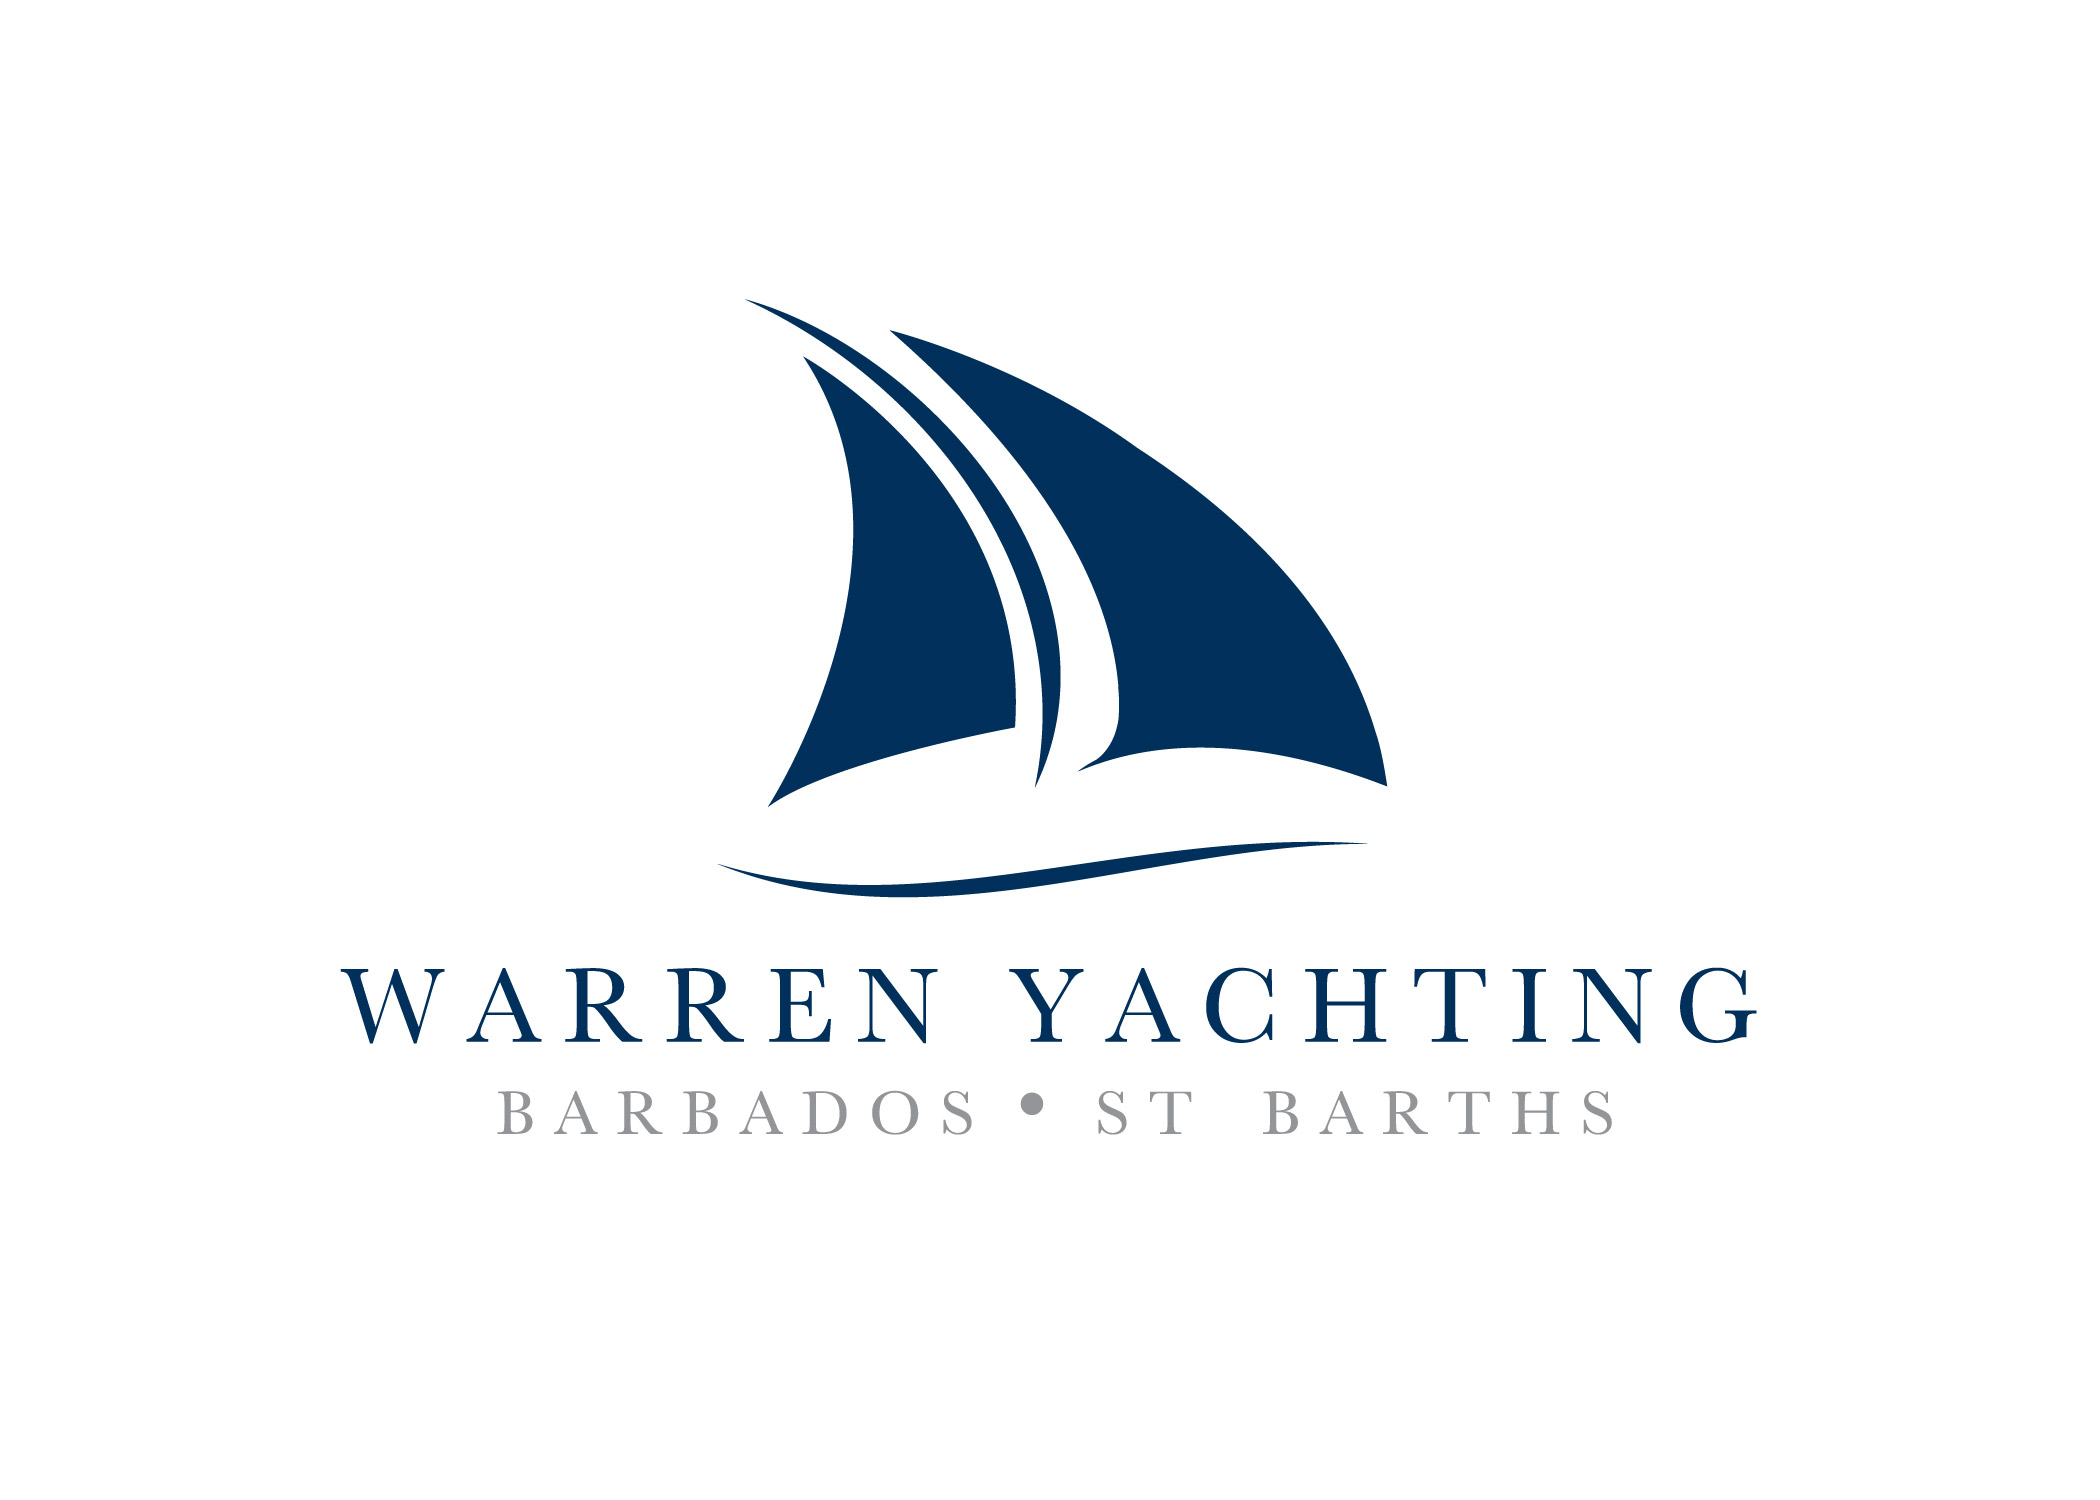 Yachting Spalacia Logo photo - 1